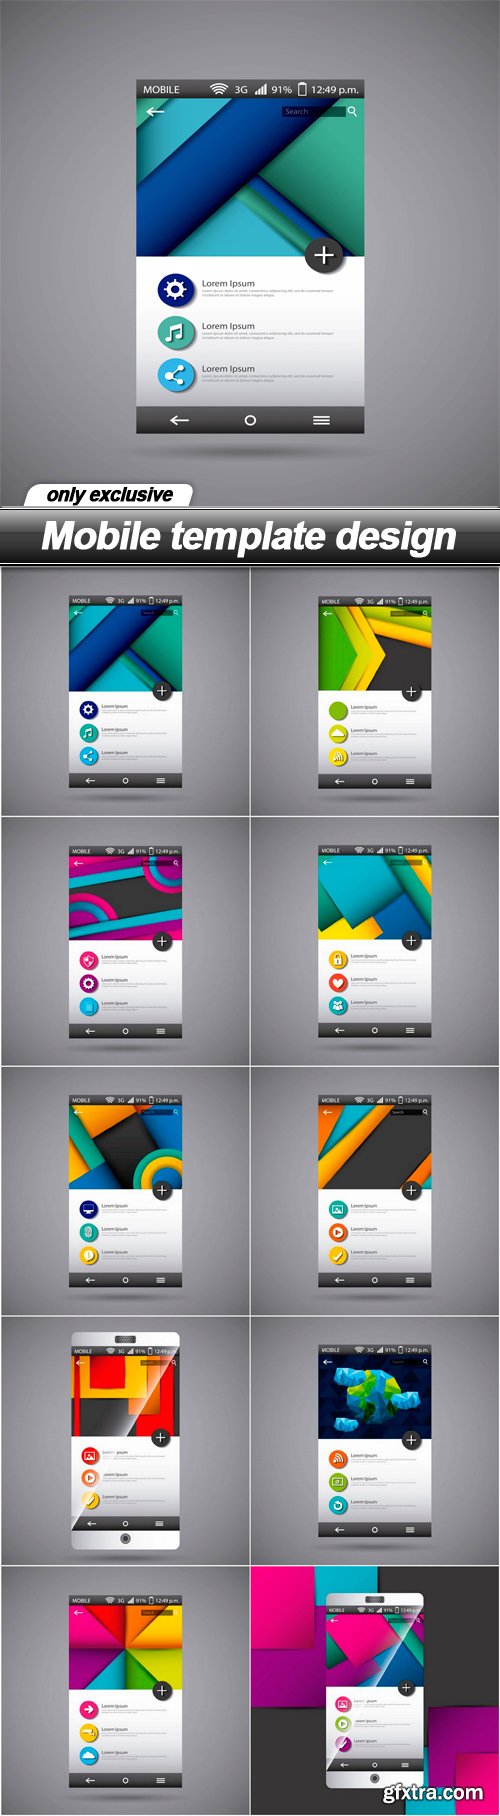 Mobile template design - 10 EPS